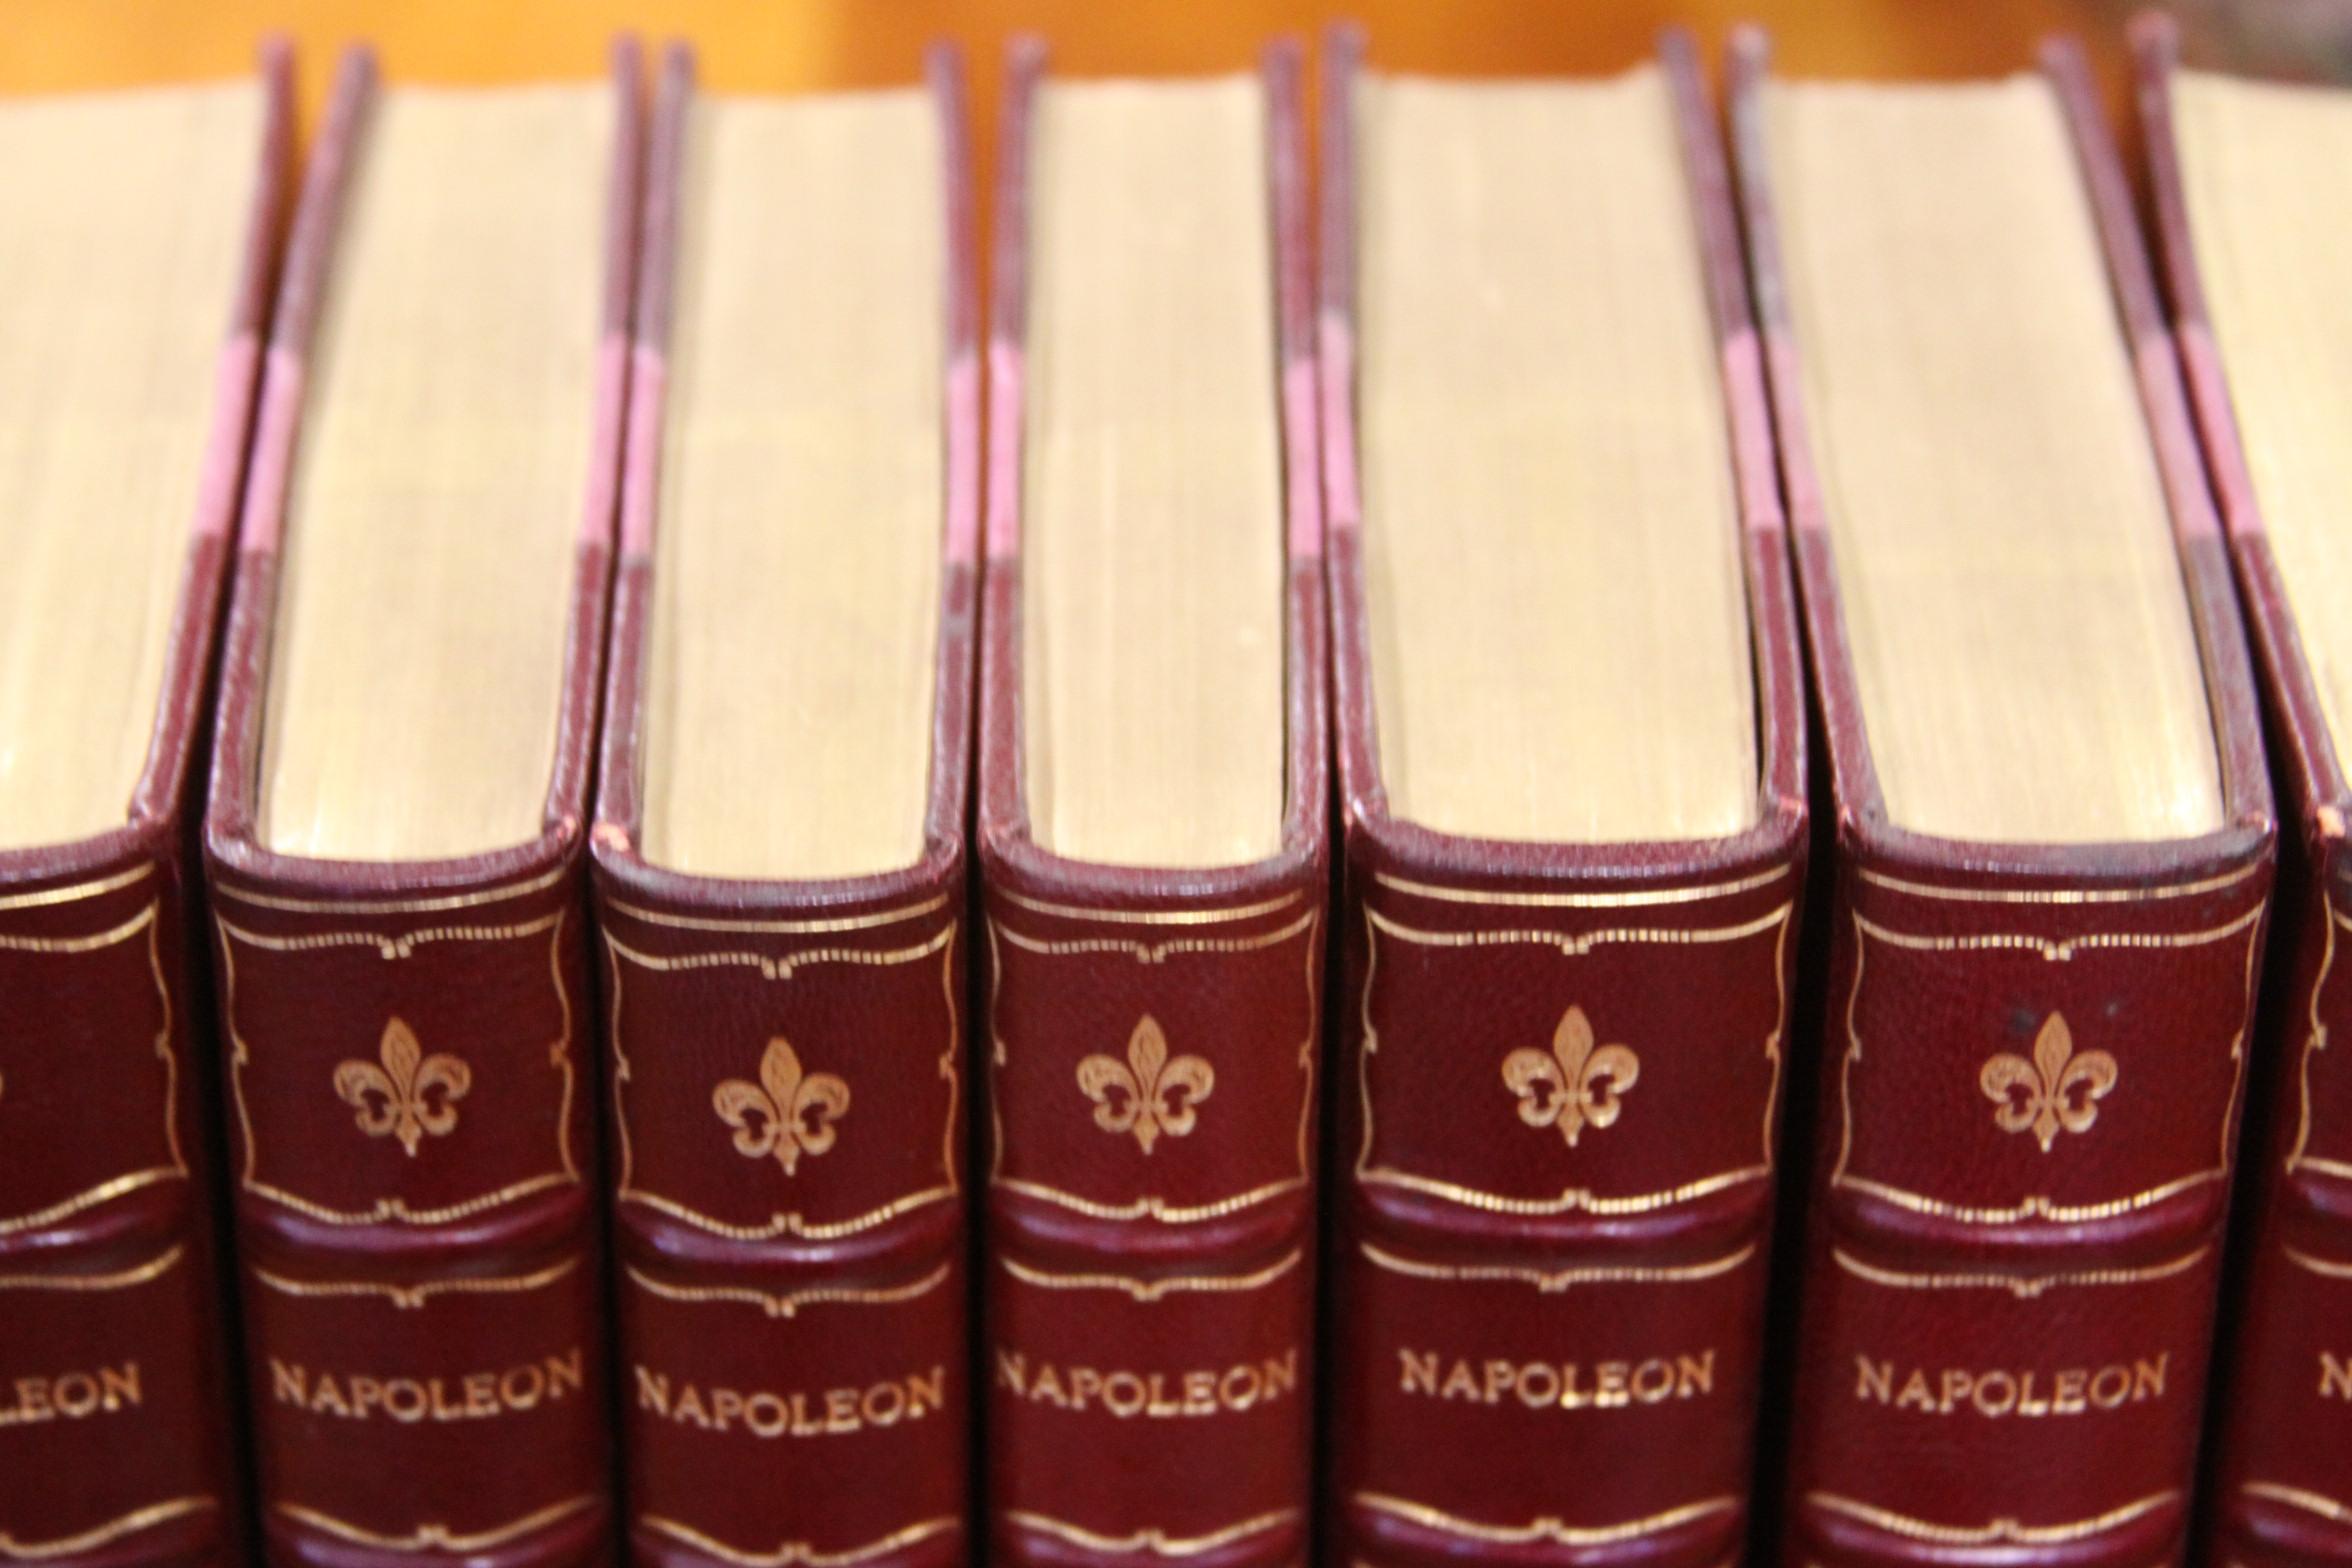 books about napoleon